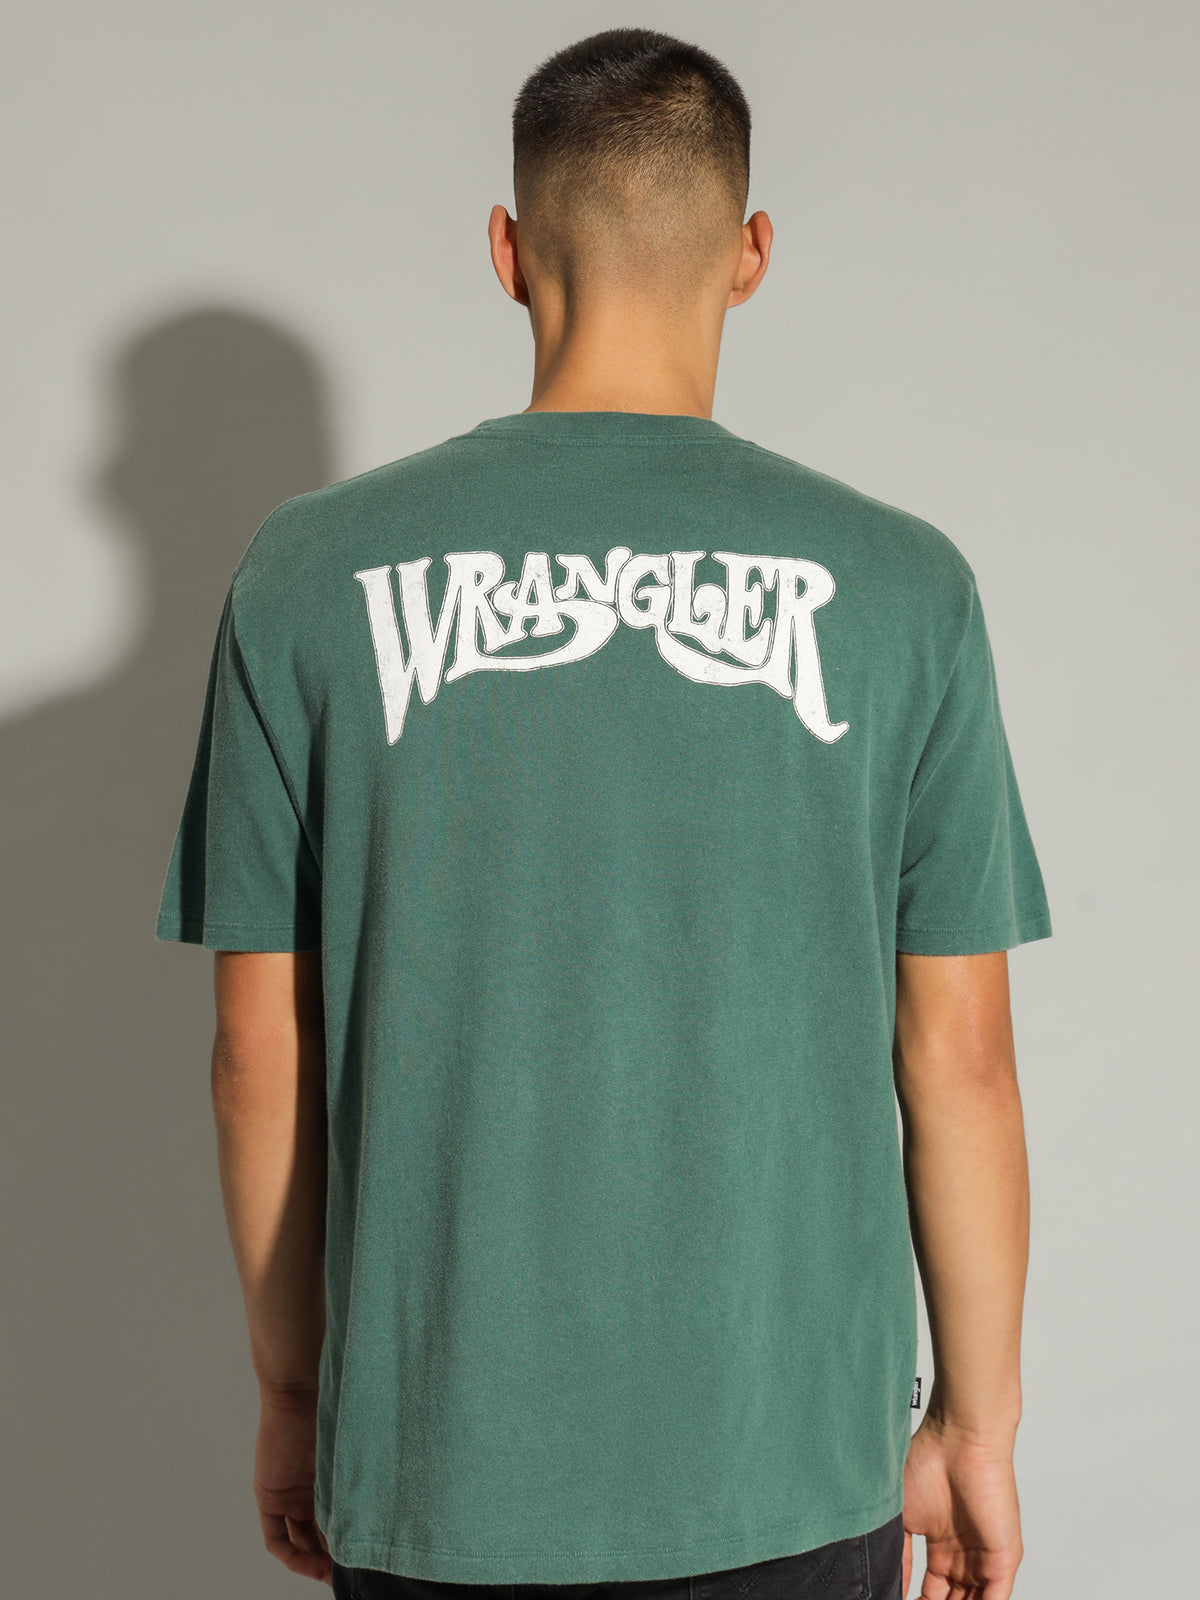 Woodstock Baggy T-Shirt in Matcha Green